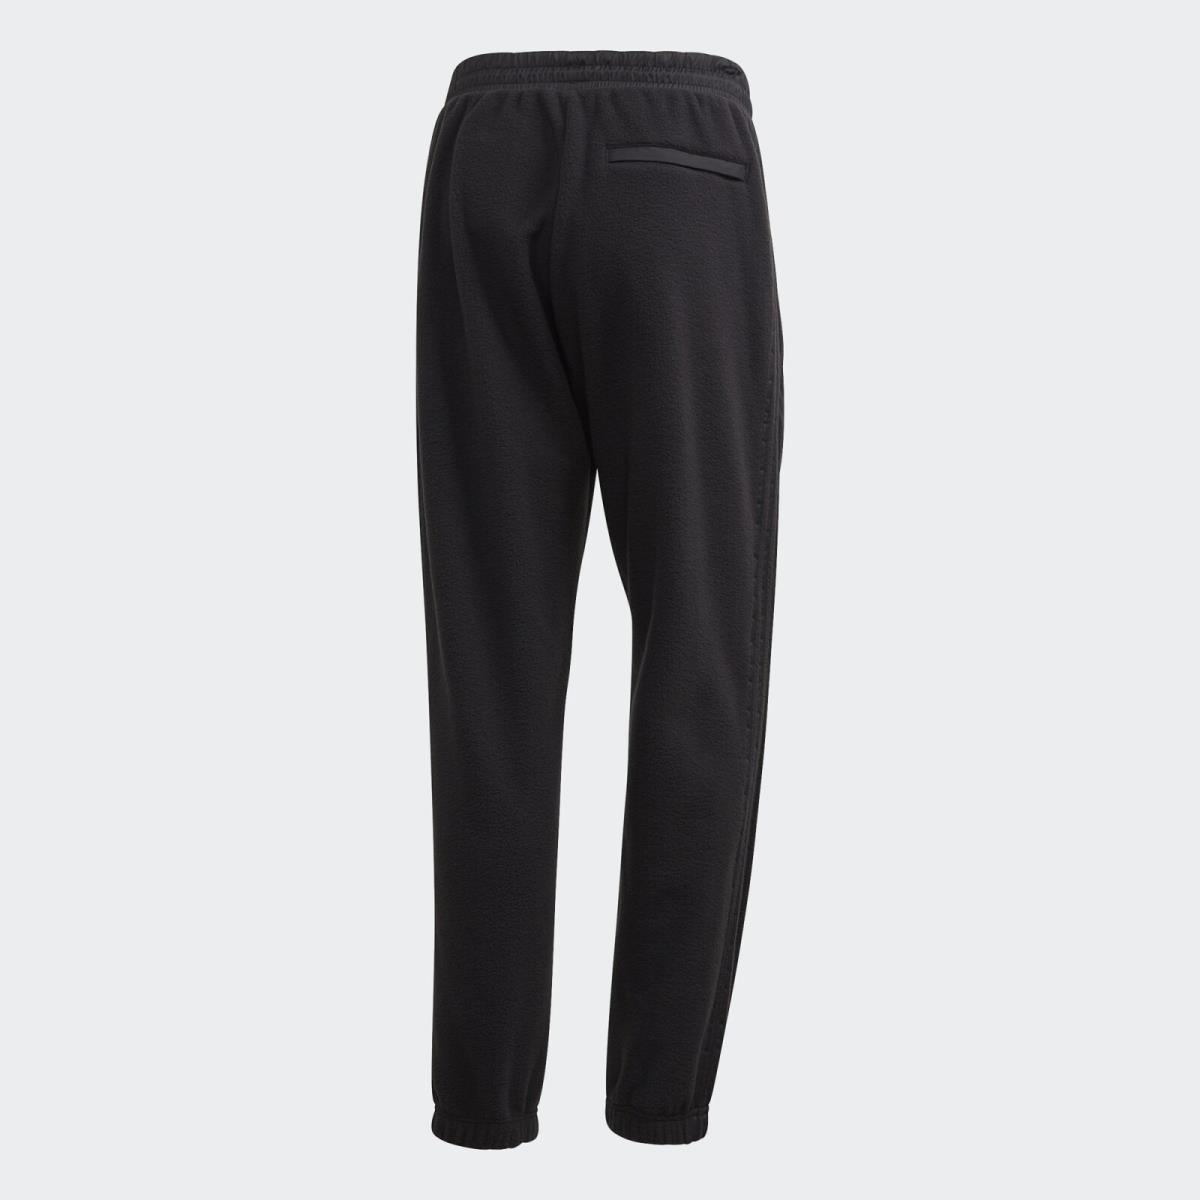 Adidas Originals Polar Fleece Pants Mens Active Pants Size 2XL Color: